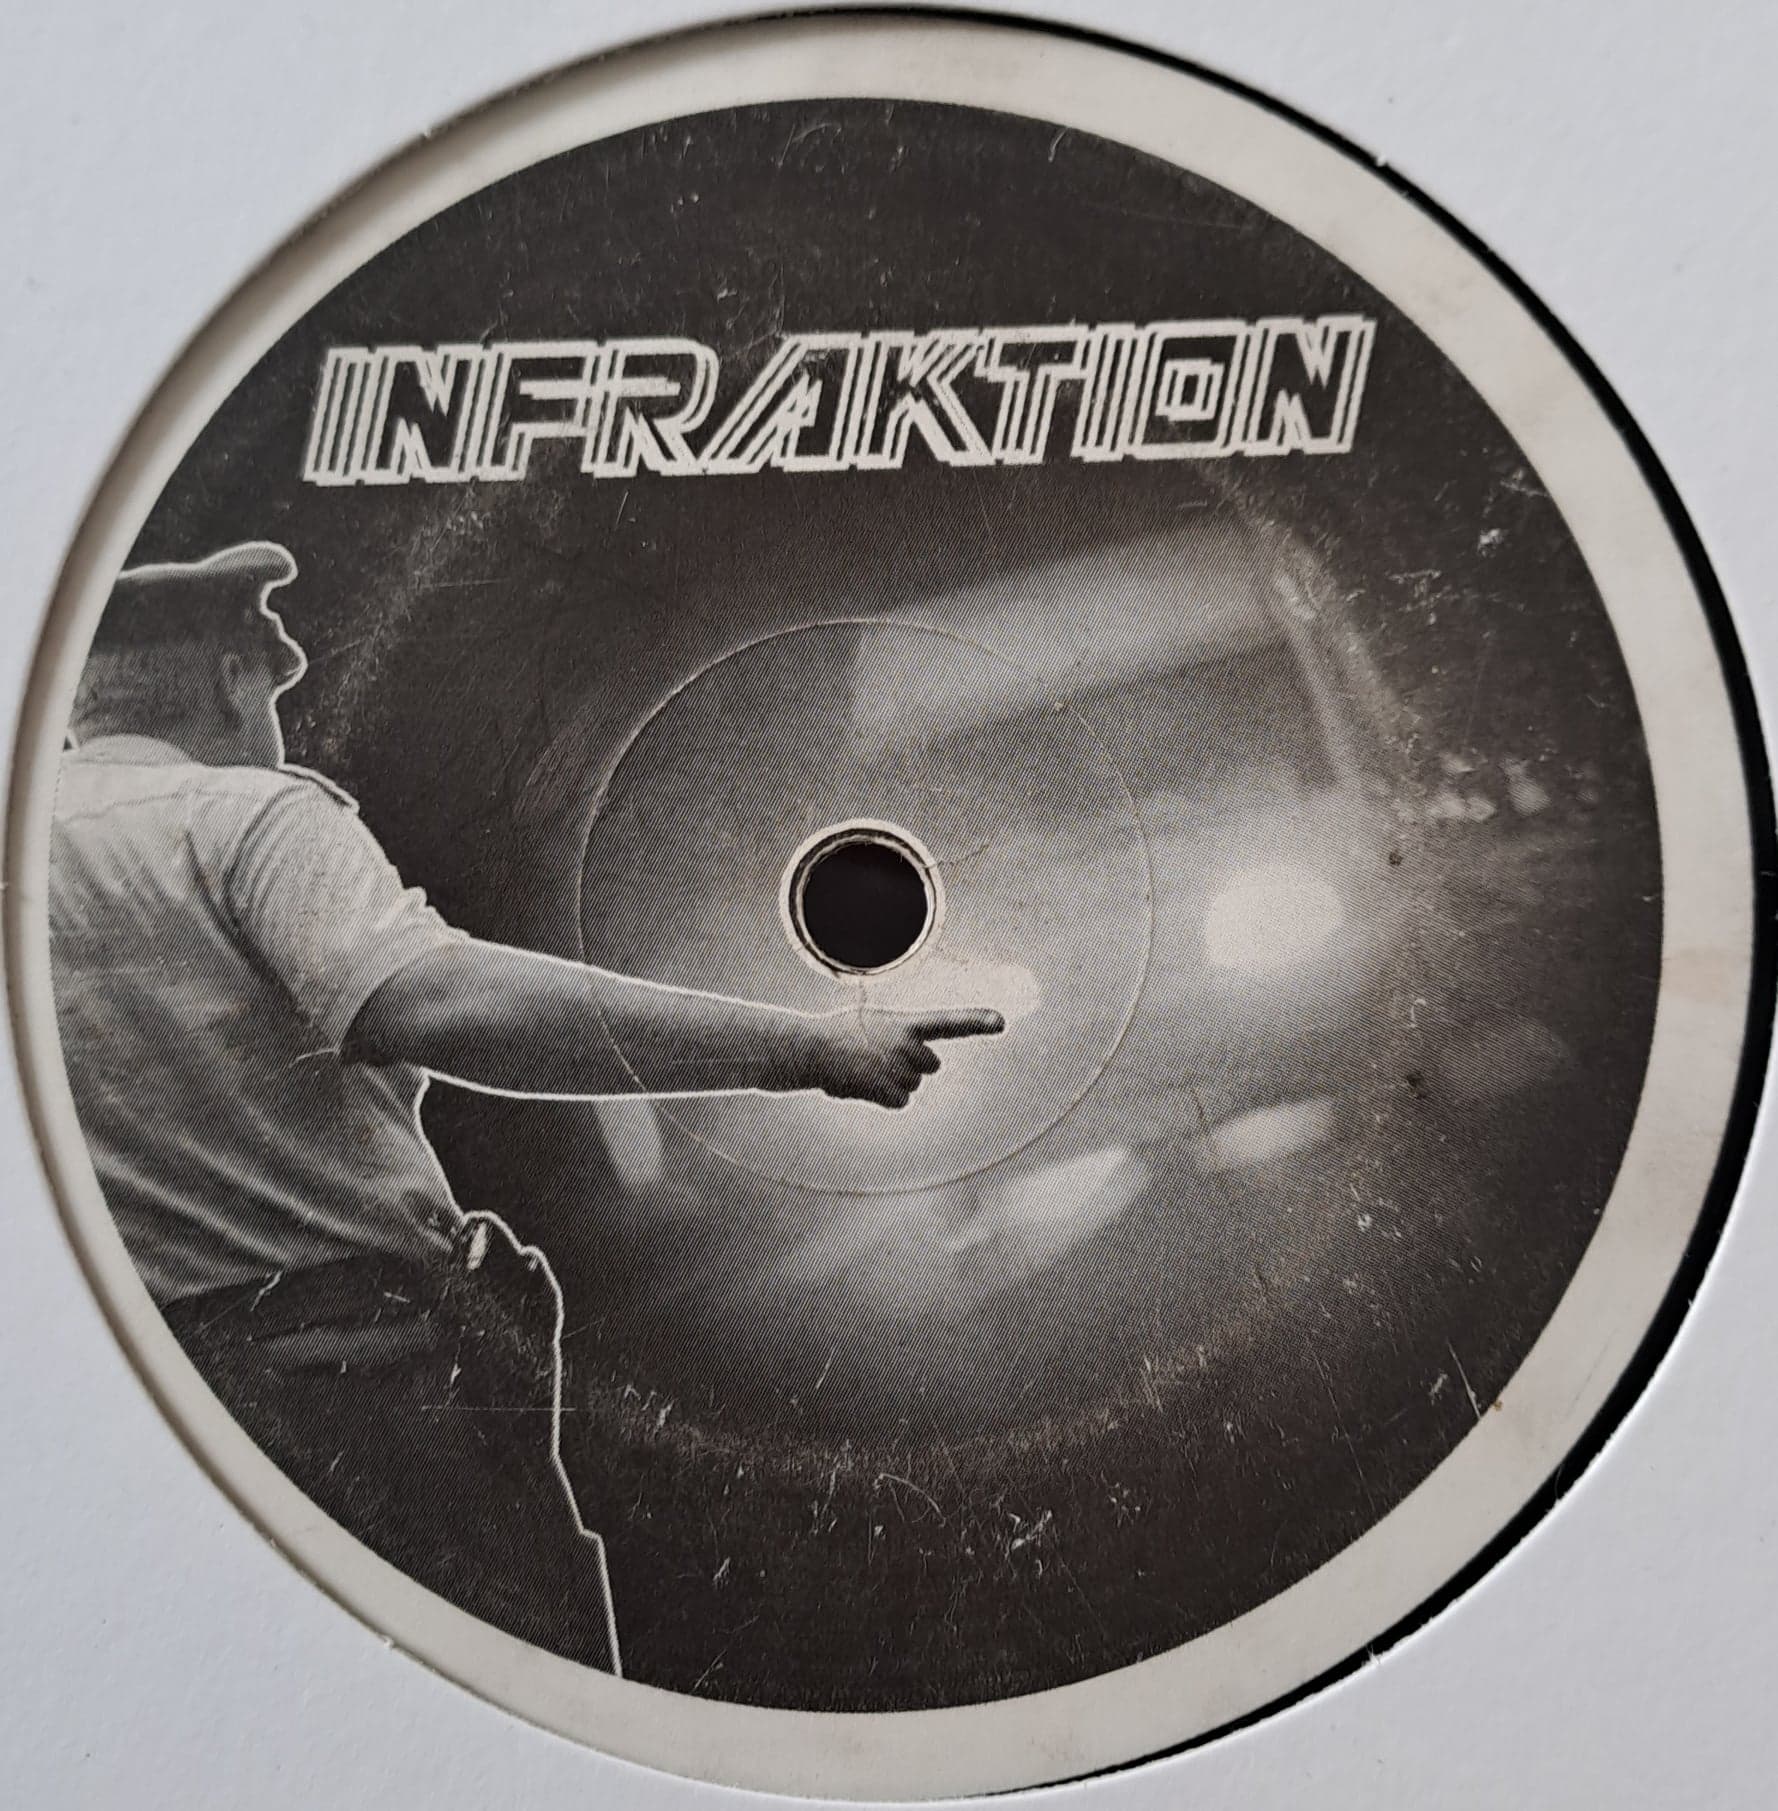 3) Infraktion 02 - vinyle break